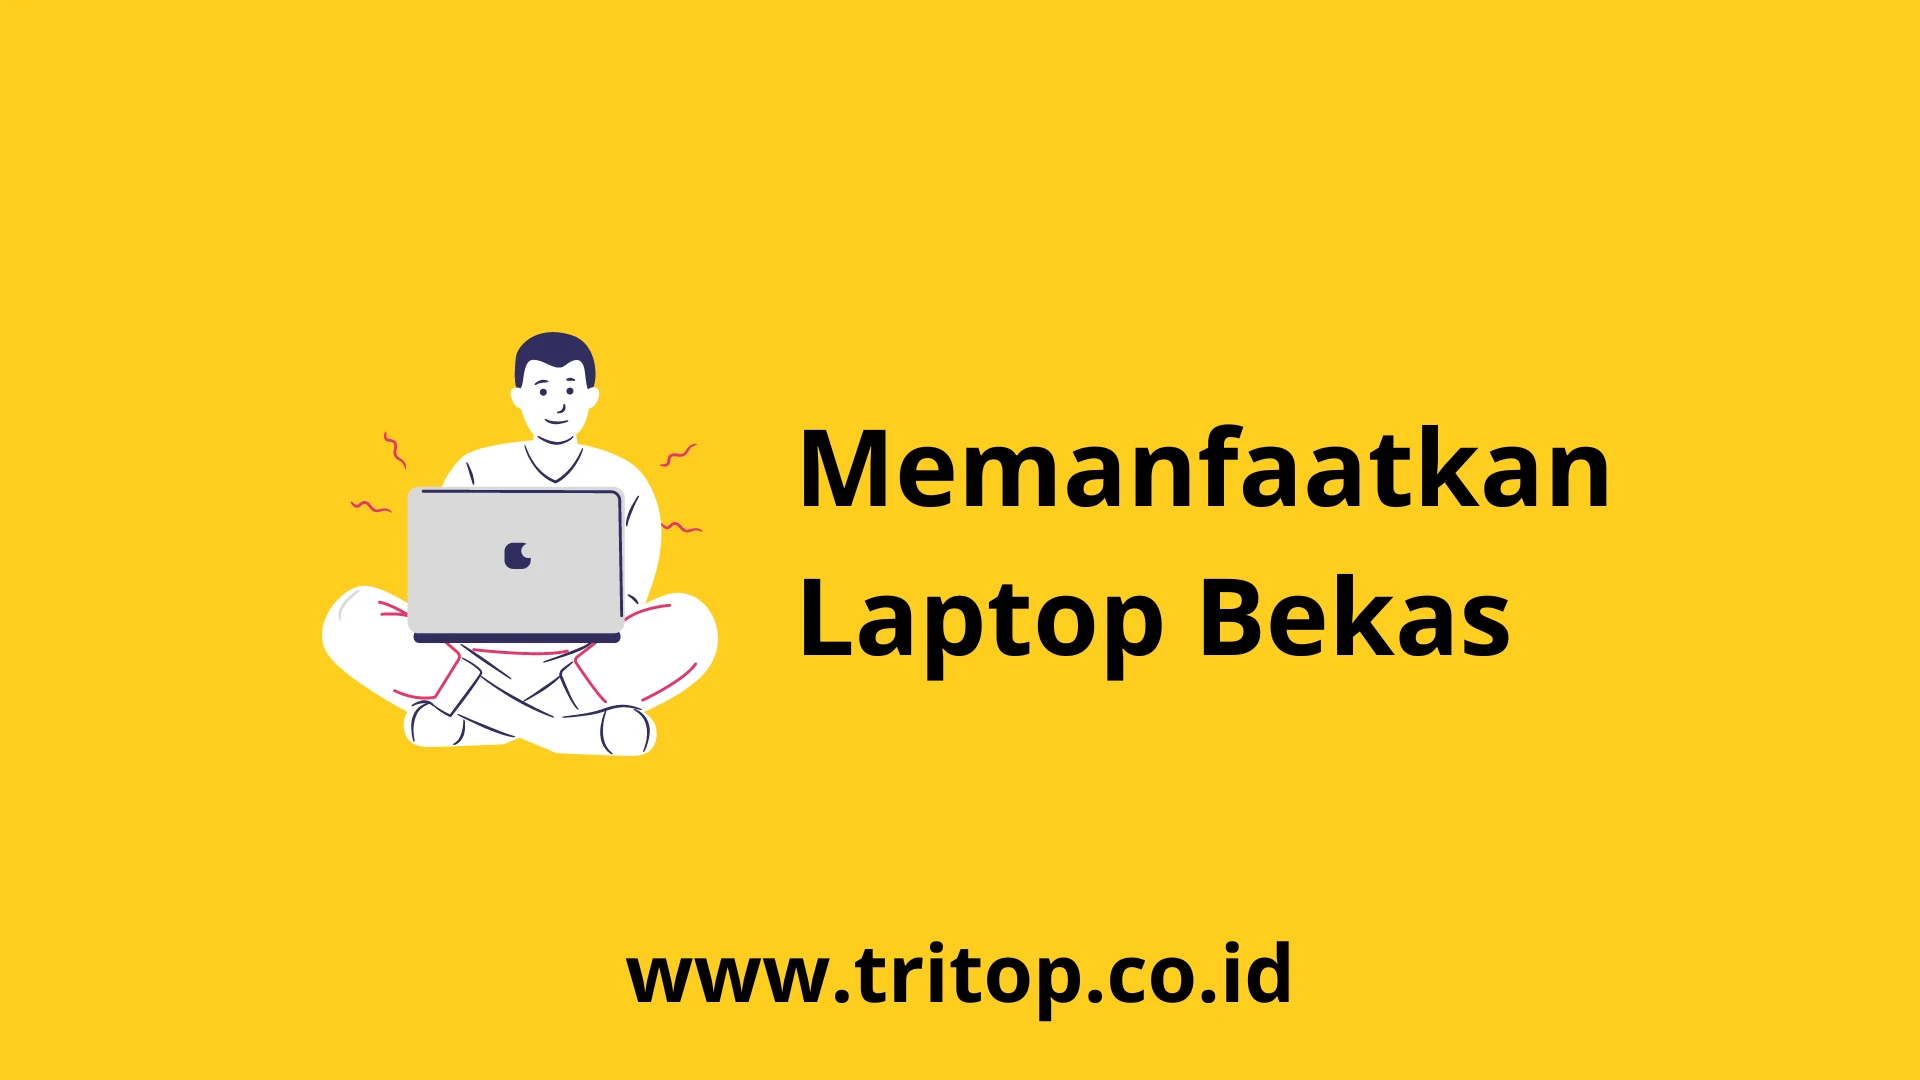 Memanfaatkan Laptop Bekas Tritop.co.id